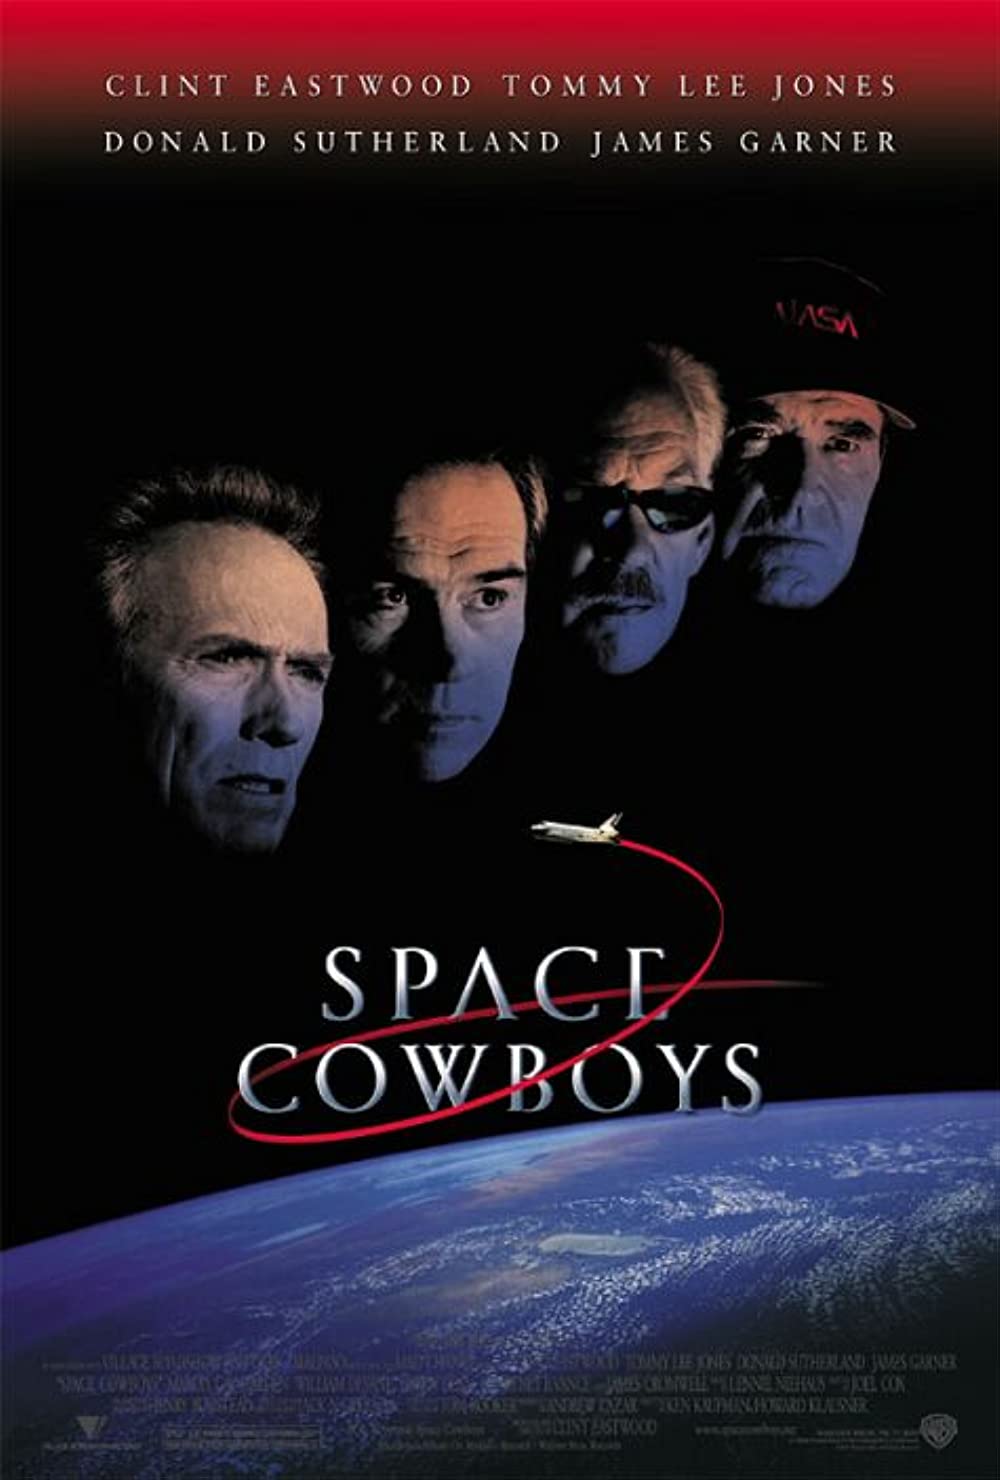 Filmbeschreibung zu Space Cowboys